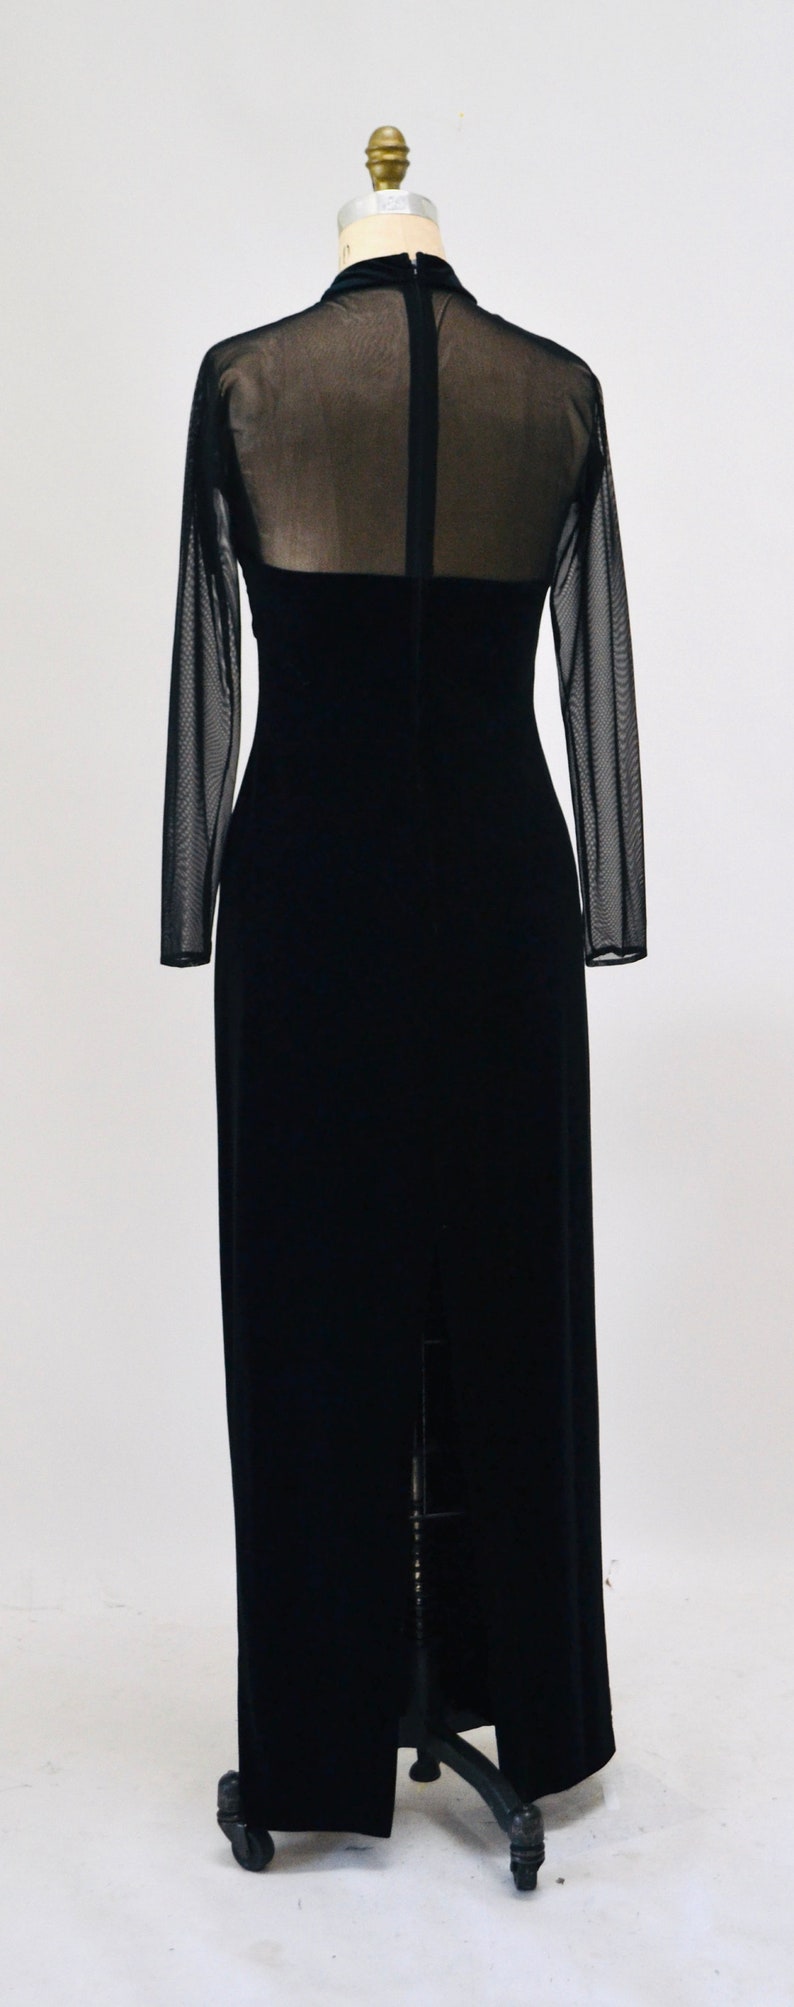 90s Vintage Black Velvet Prom Dress Illusion Dress Medium// Black Body Con 90s Prom Dress Bondage Dress Medium Sheer Sleeve long Black Dress image 6